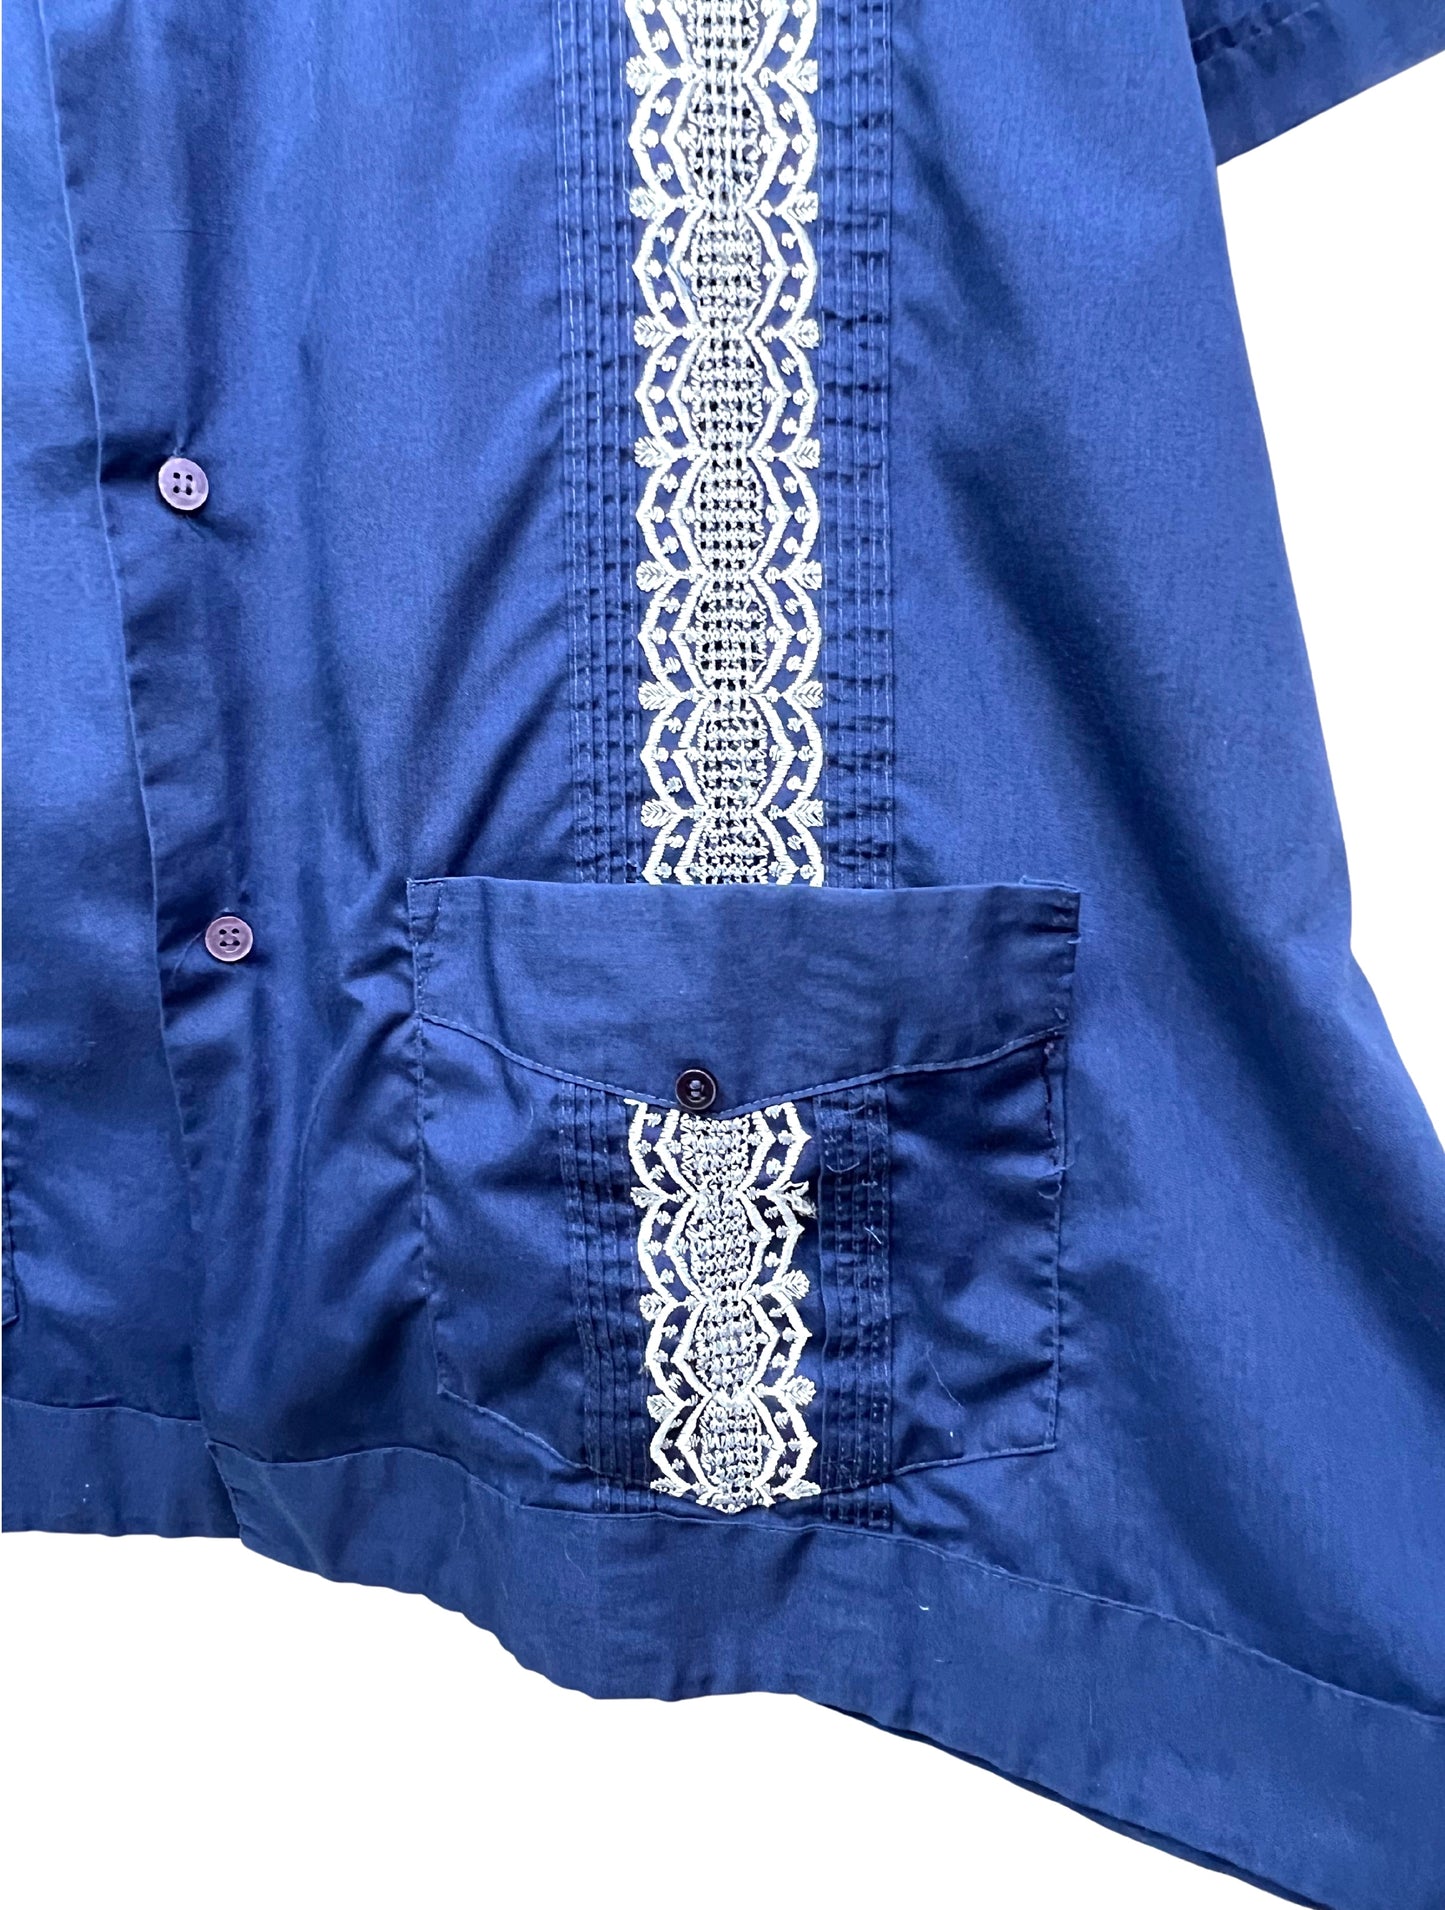 90’s Navy Guayabera Corzini Button Down Shirt Size 4X